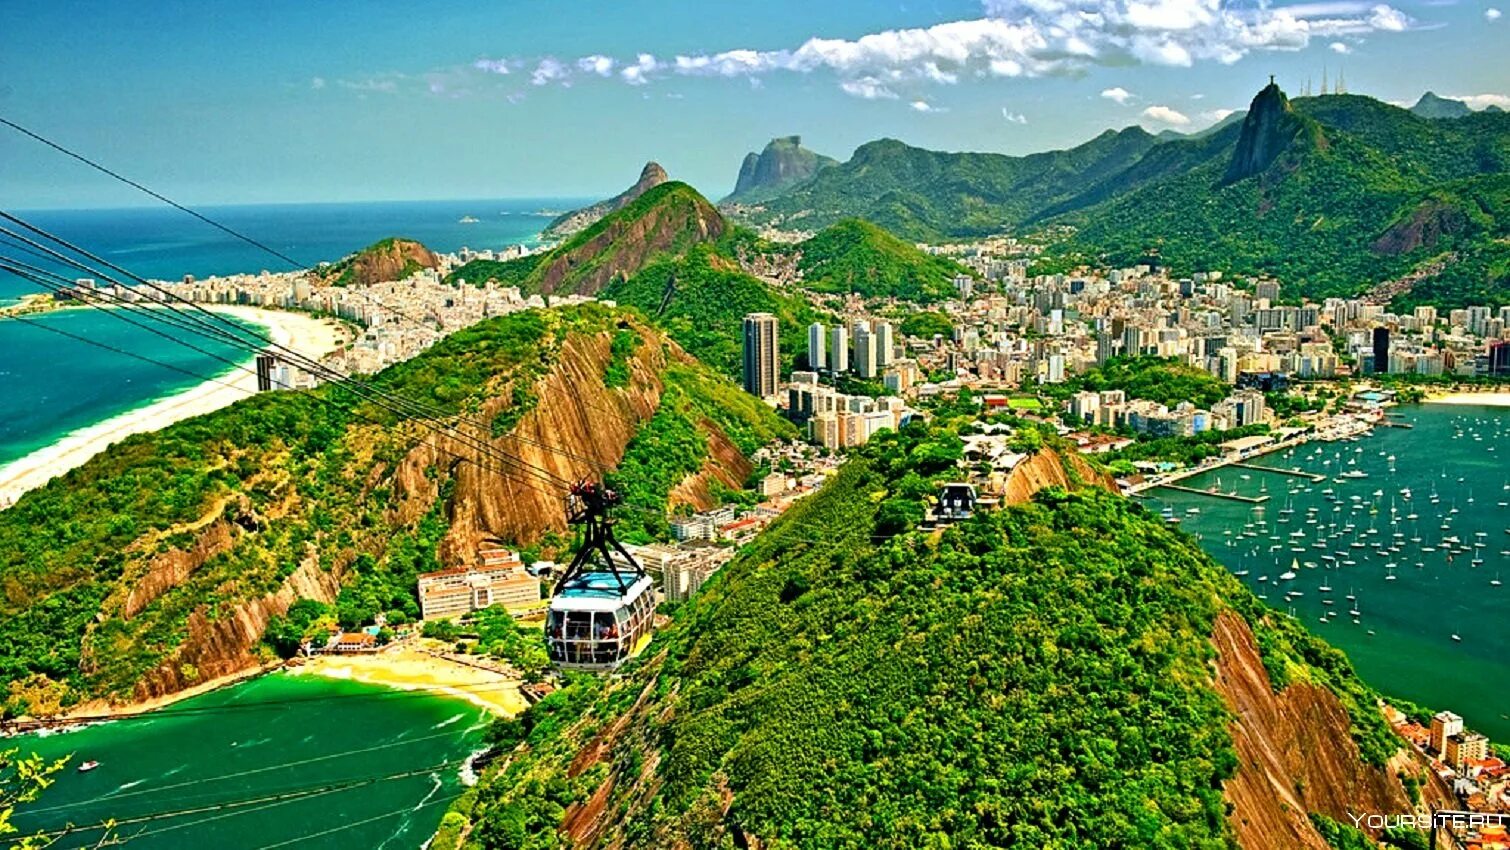 Country brazil. Бразилия Рио де Жанейро. Рио-де-Жанейро город. Рио-де-Жанейро город в Бразилии достопримечательности. Южная Америка Рио де Жанейро.